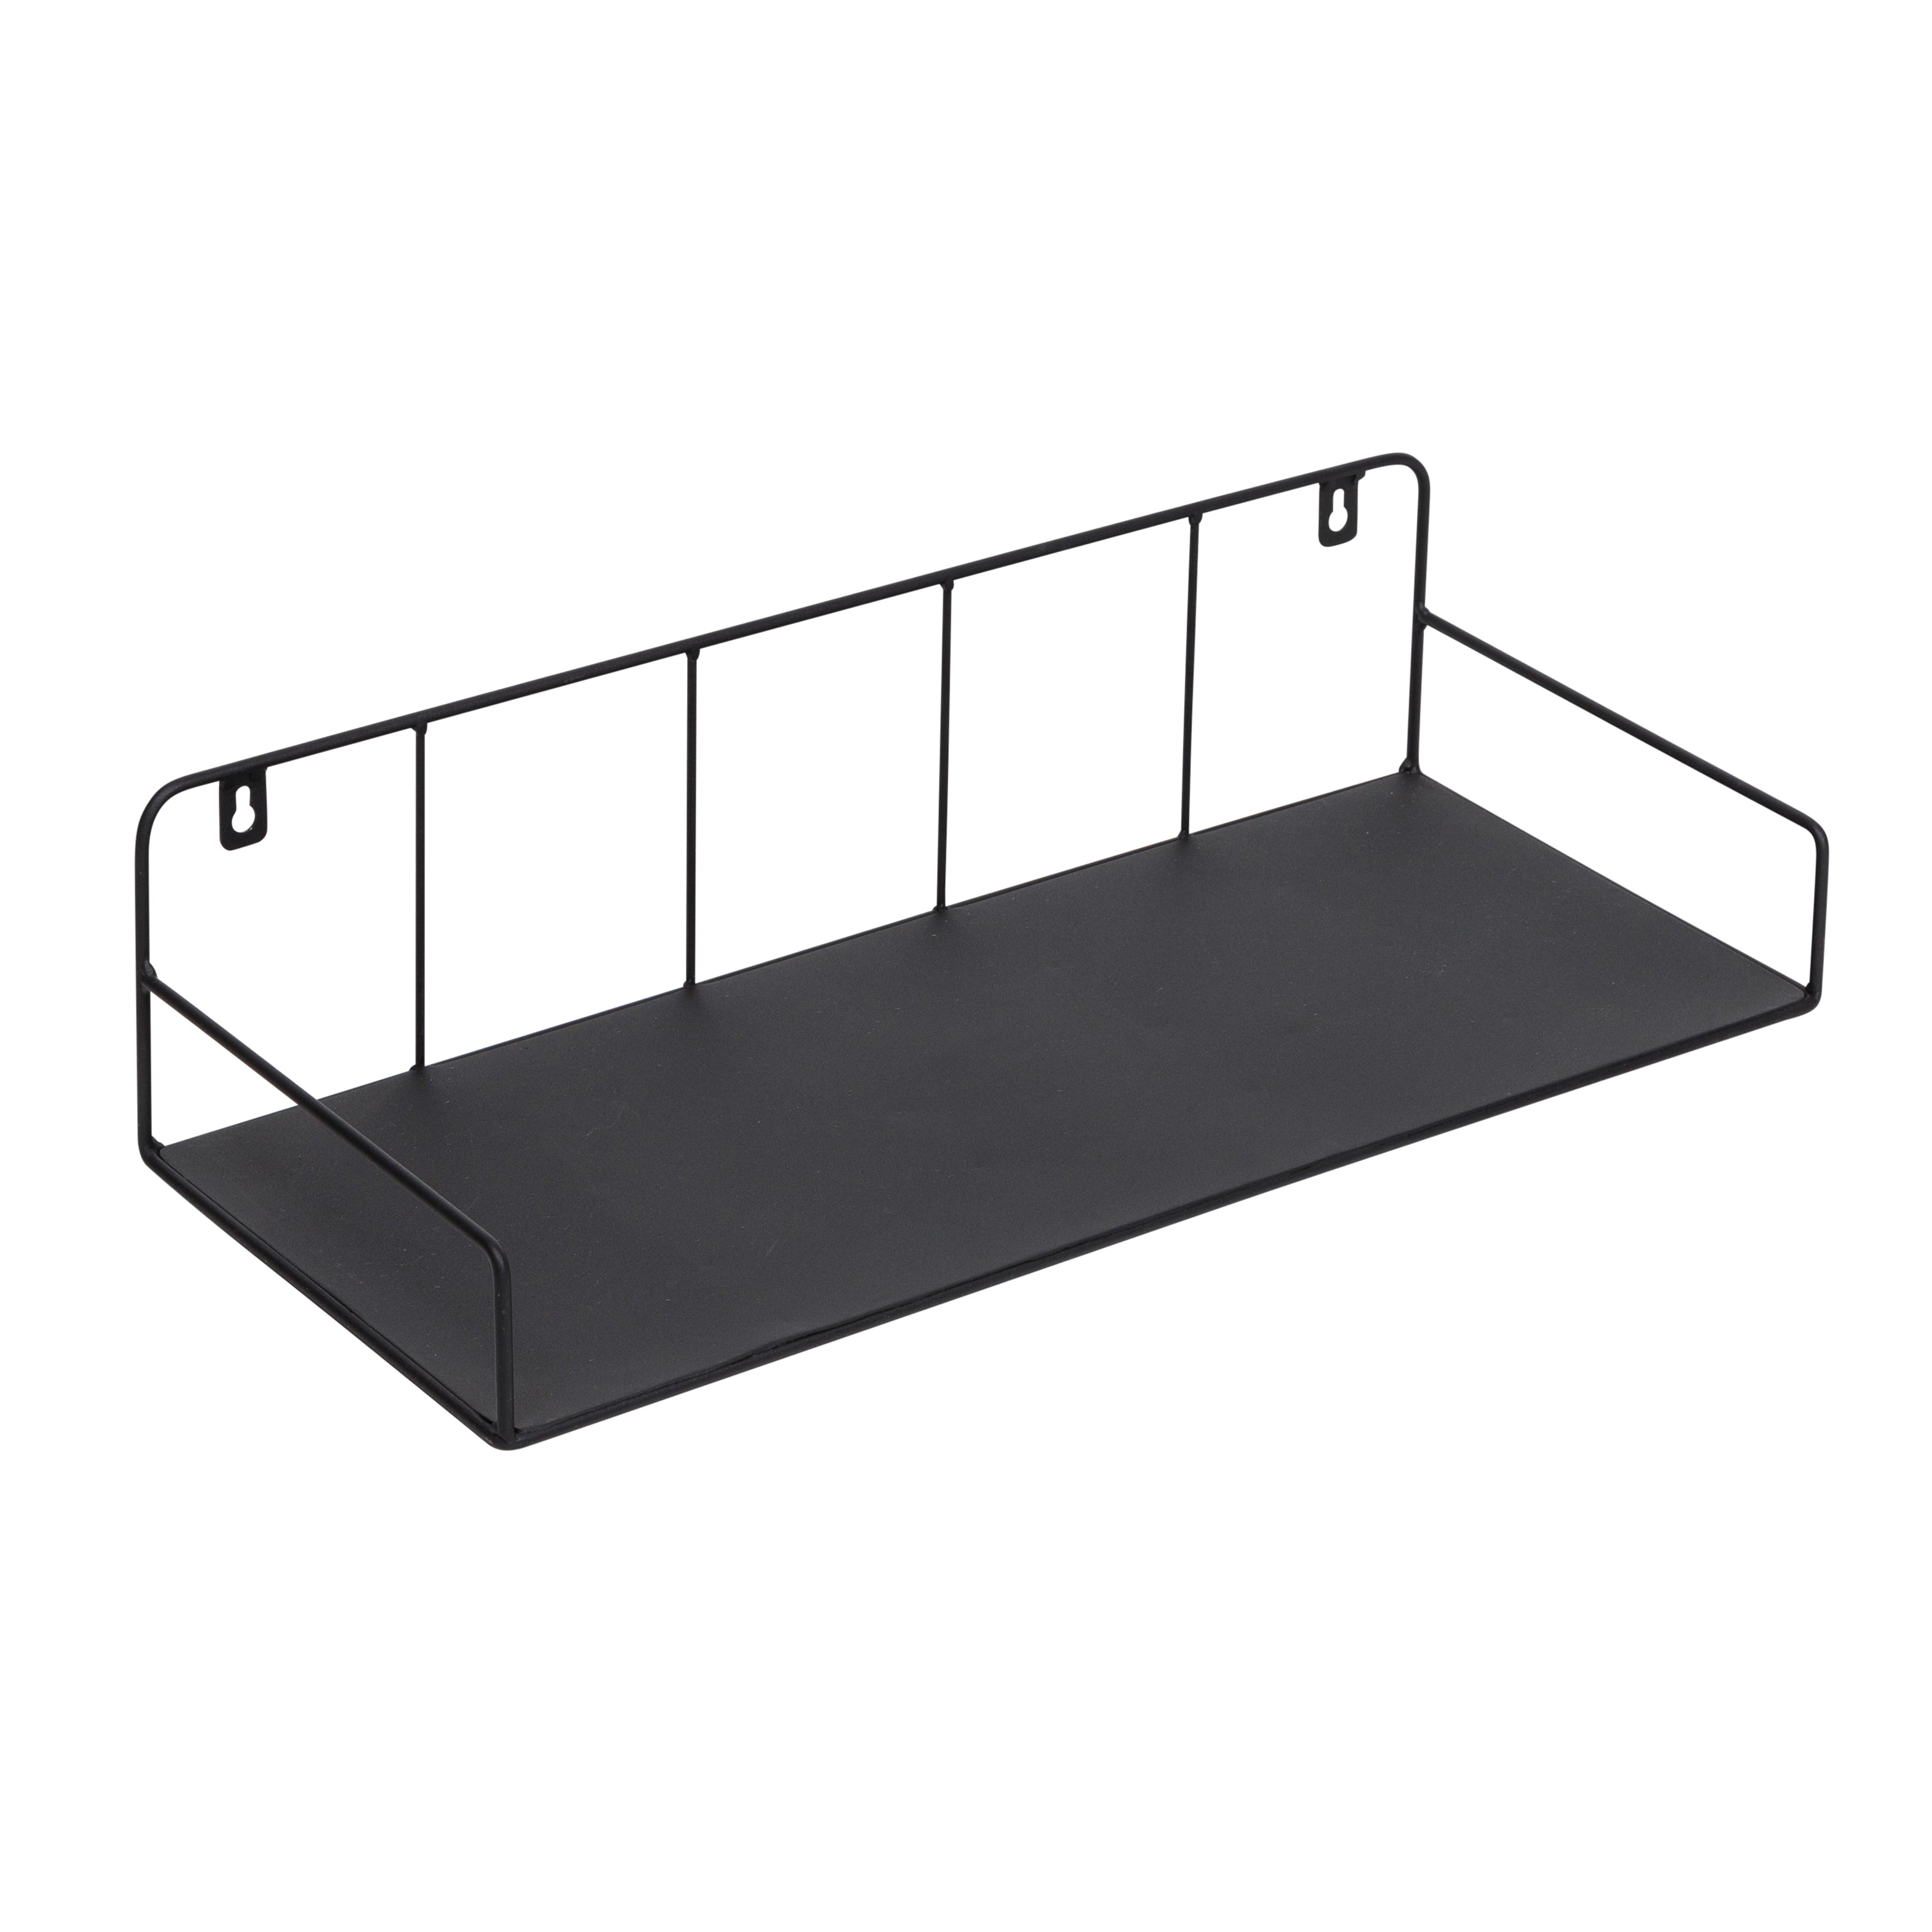 Honey-Can-Do Black Steel Garage Grid Wall Shelf